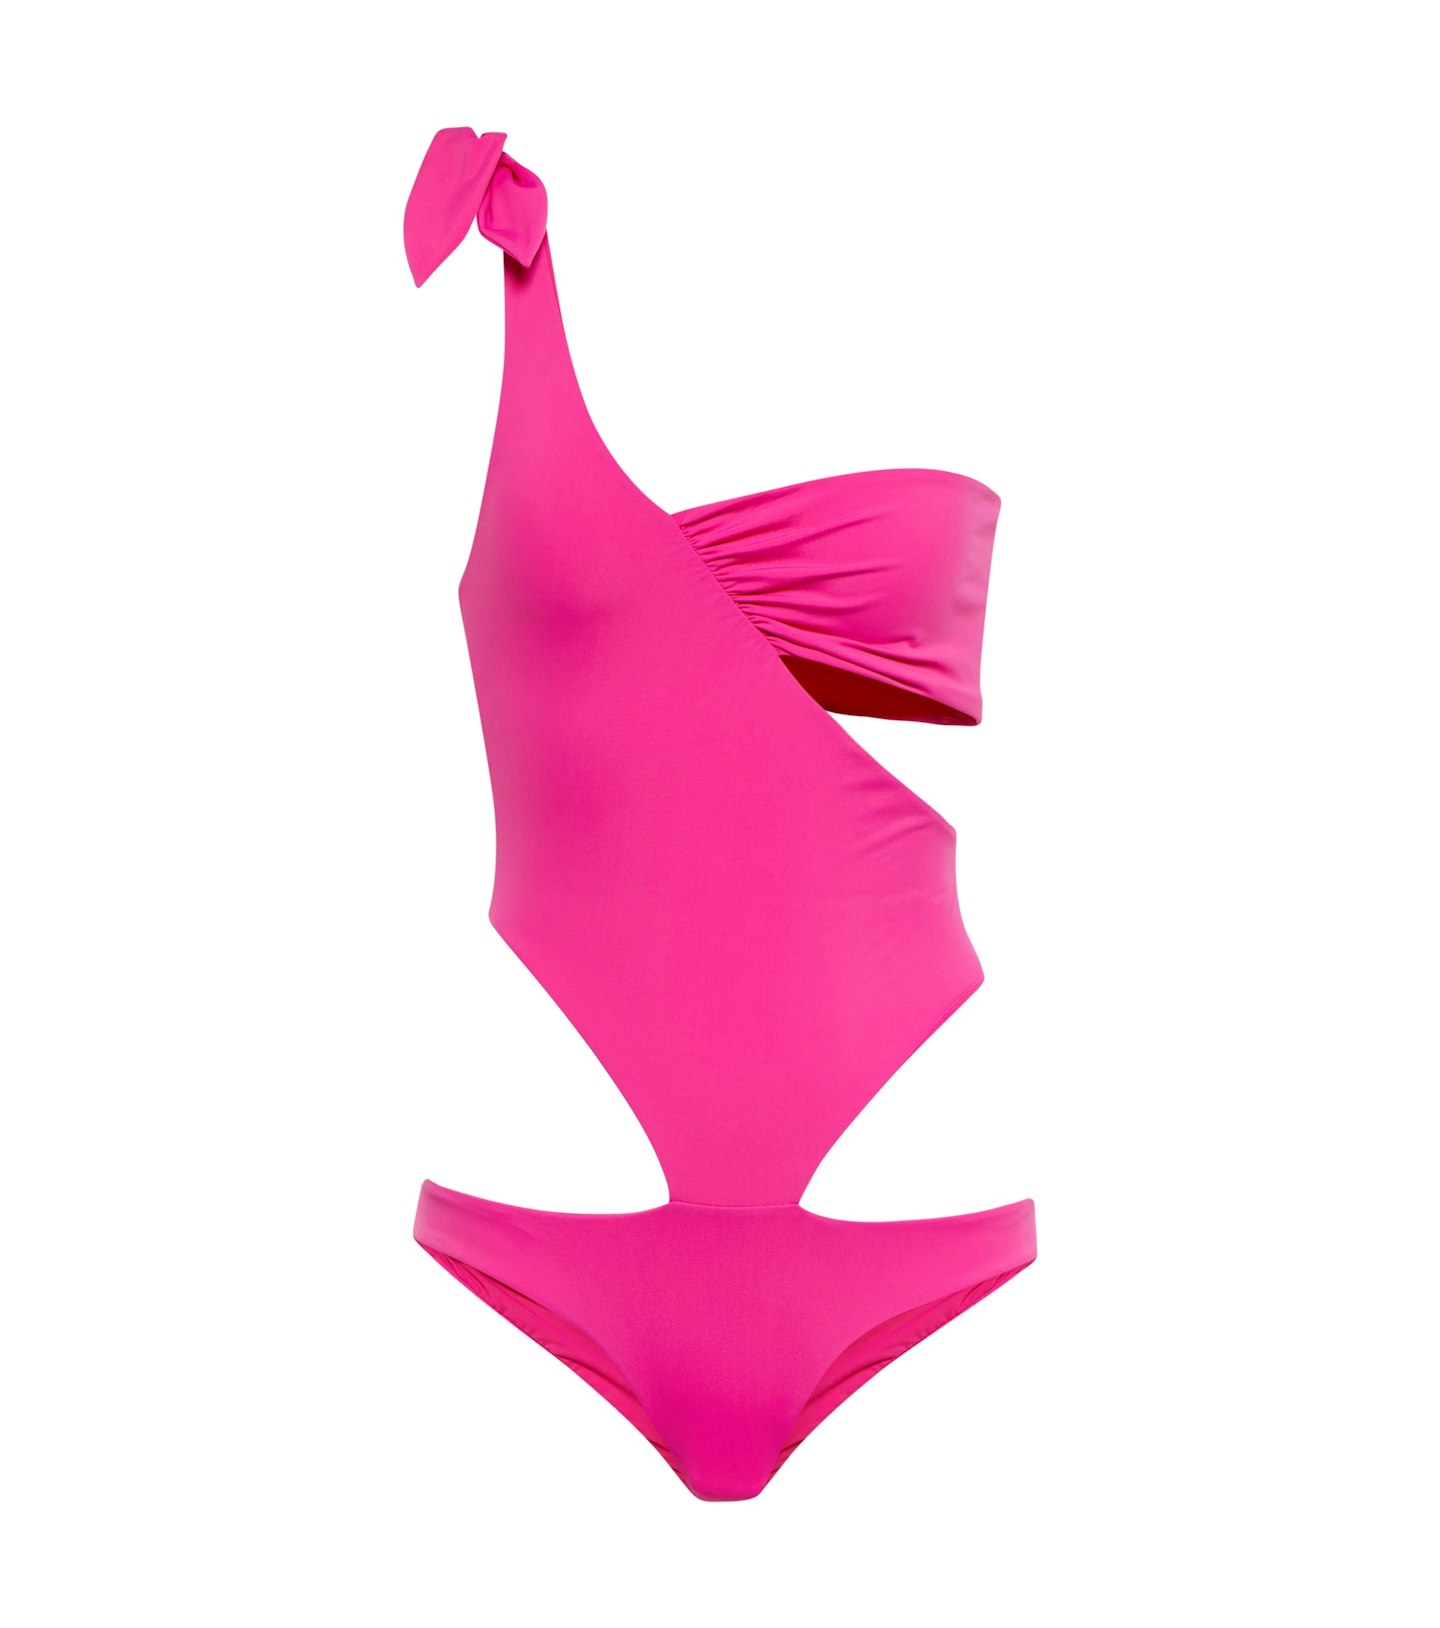 Nensi Dojaka mytheresa One Shoulder Swimsuit, £436